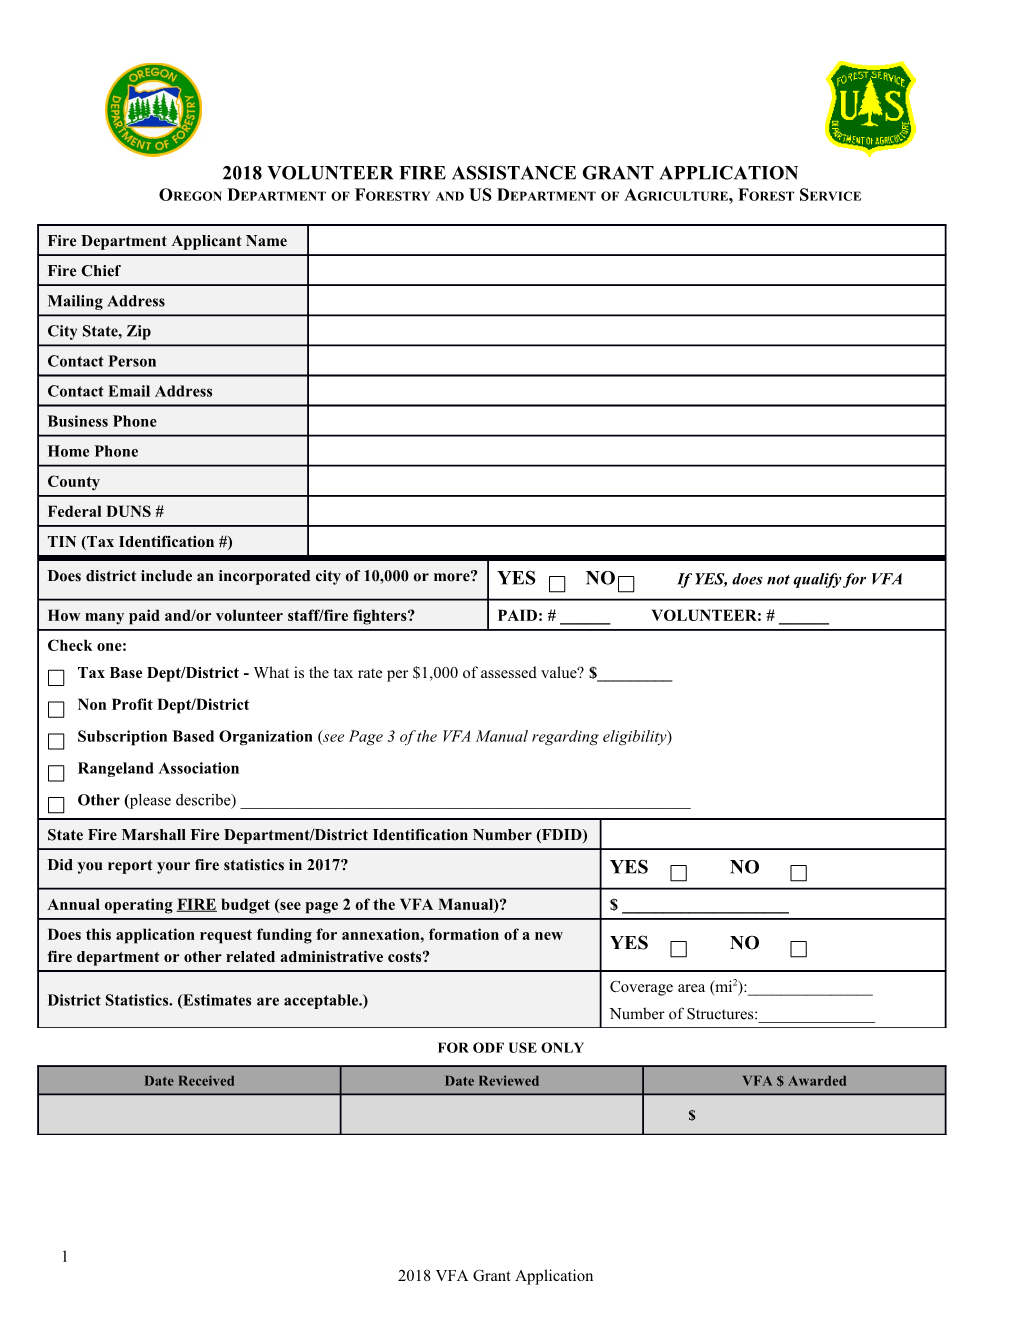 2014 VFA Application Form